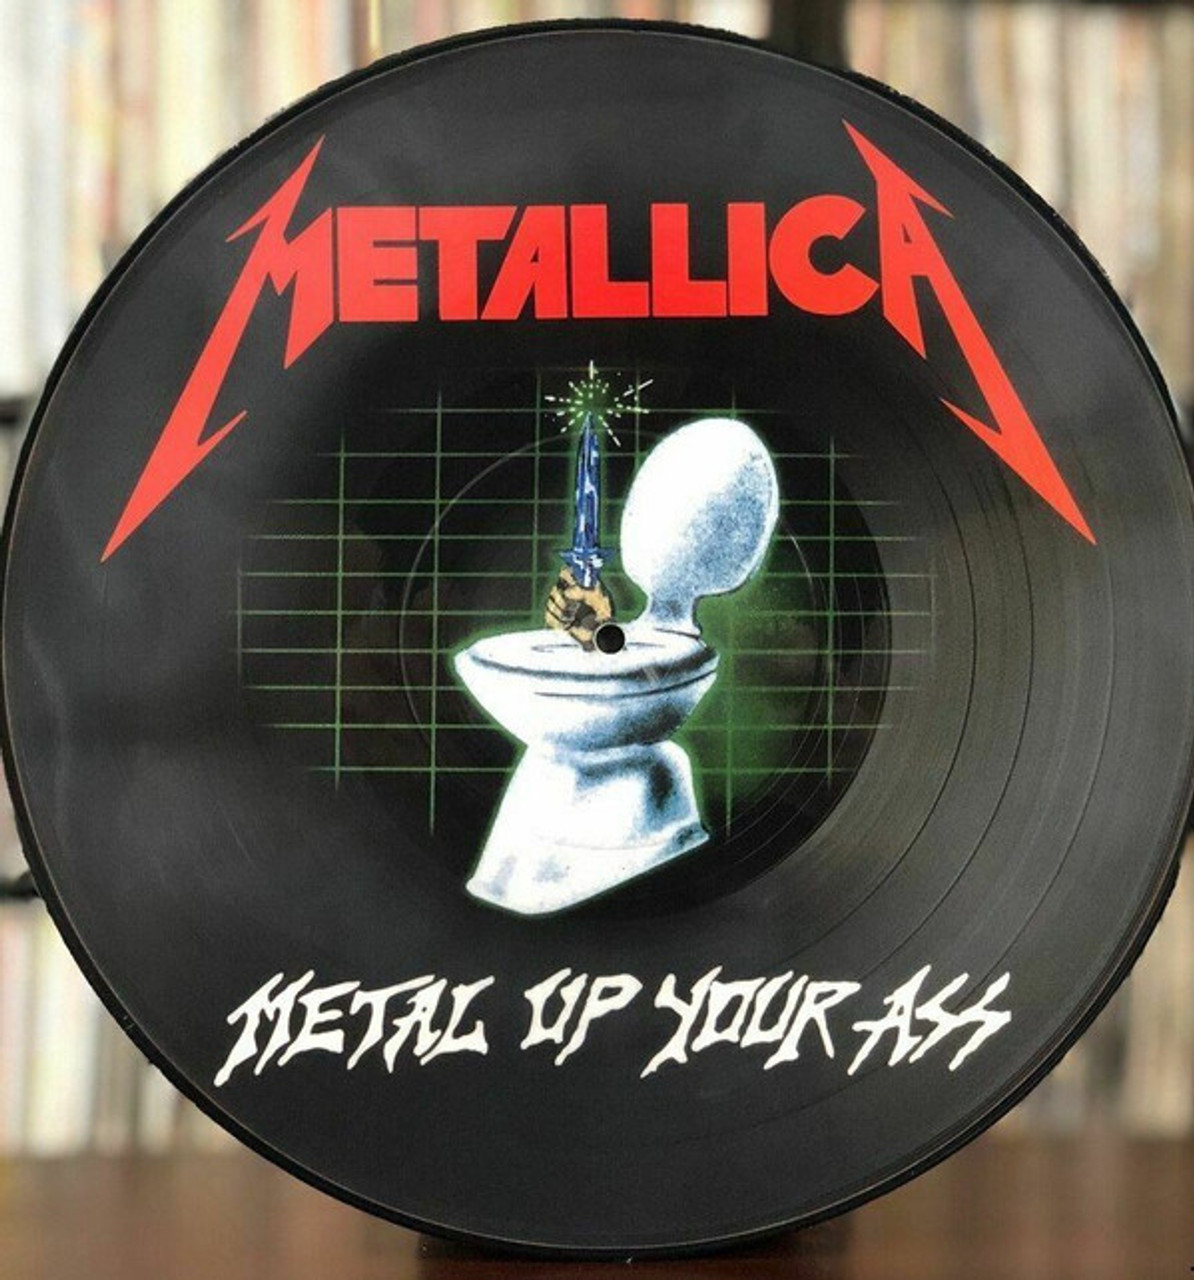 METALLICA Metal Up Your Ass - New Import Picture Disc Vinyl LP w